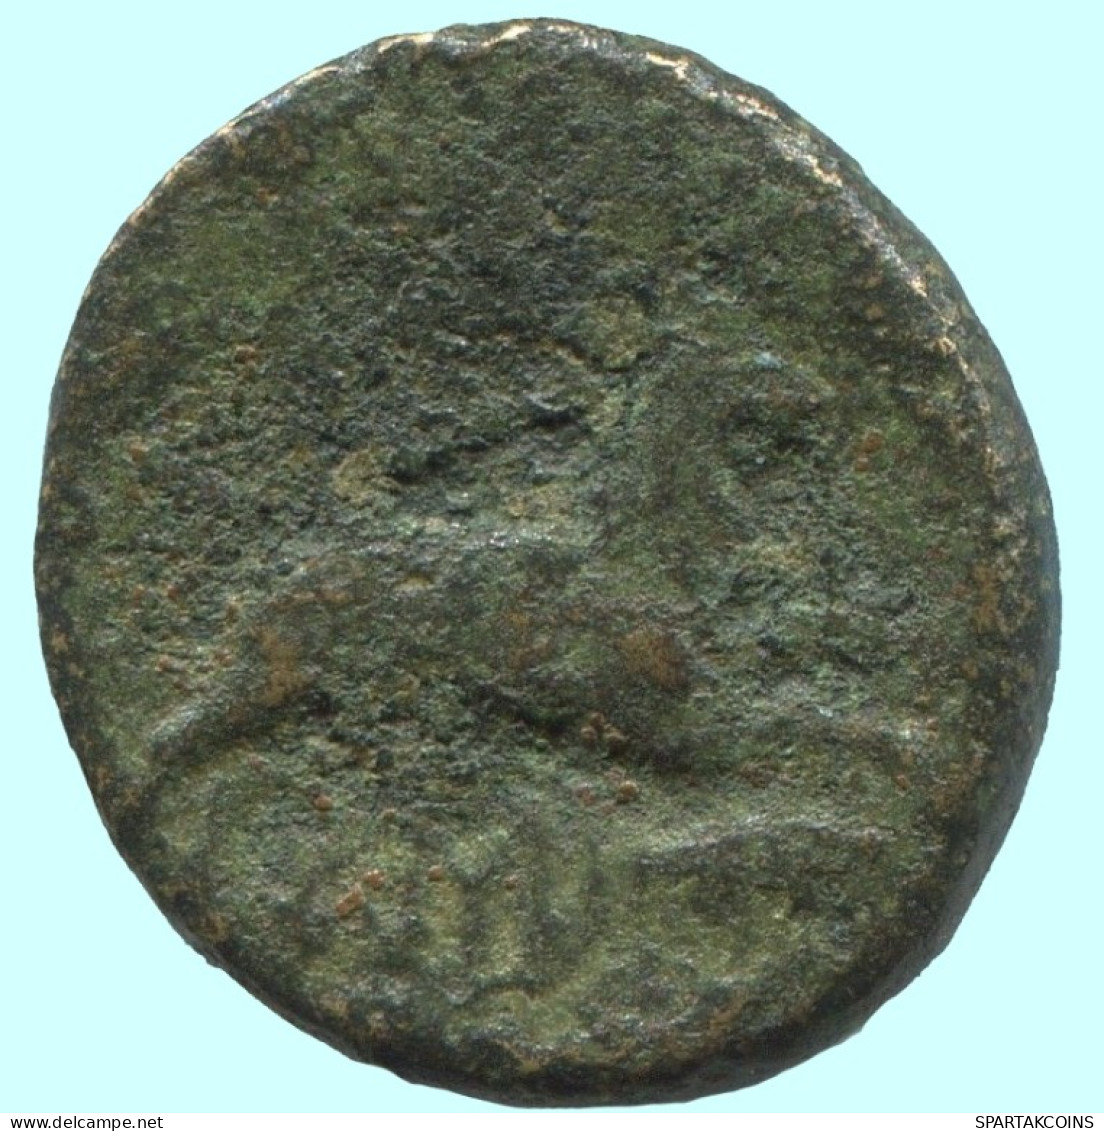 LION Antiguo Auténtico Original GRIEGO Moneda 4.1g/16mm #ANT1773.10.E.A - Greek